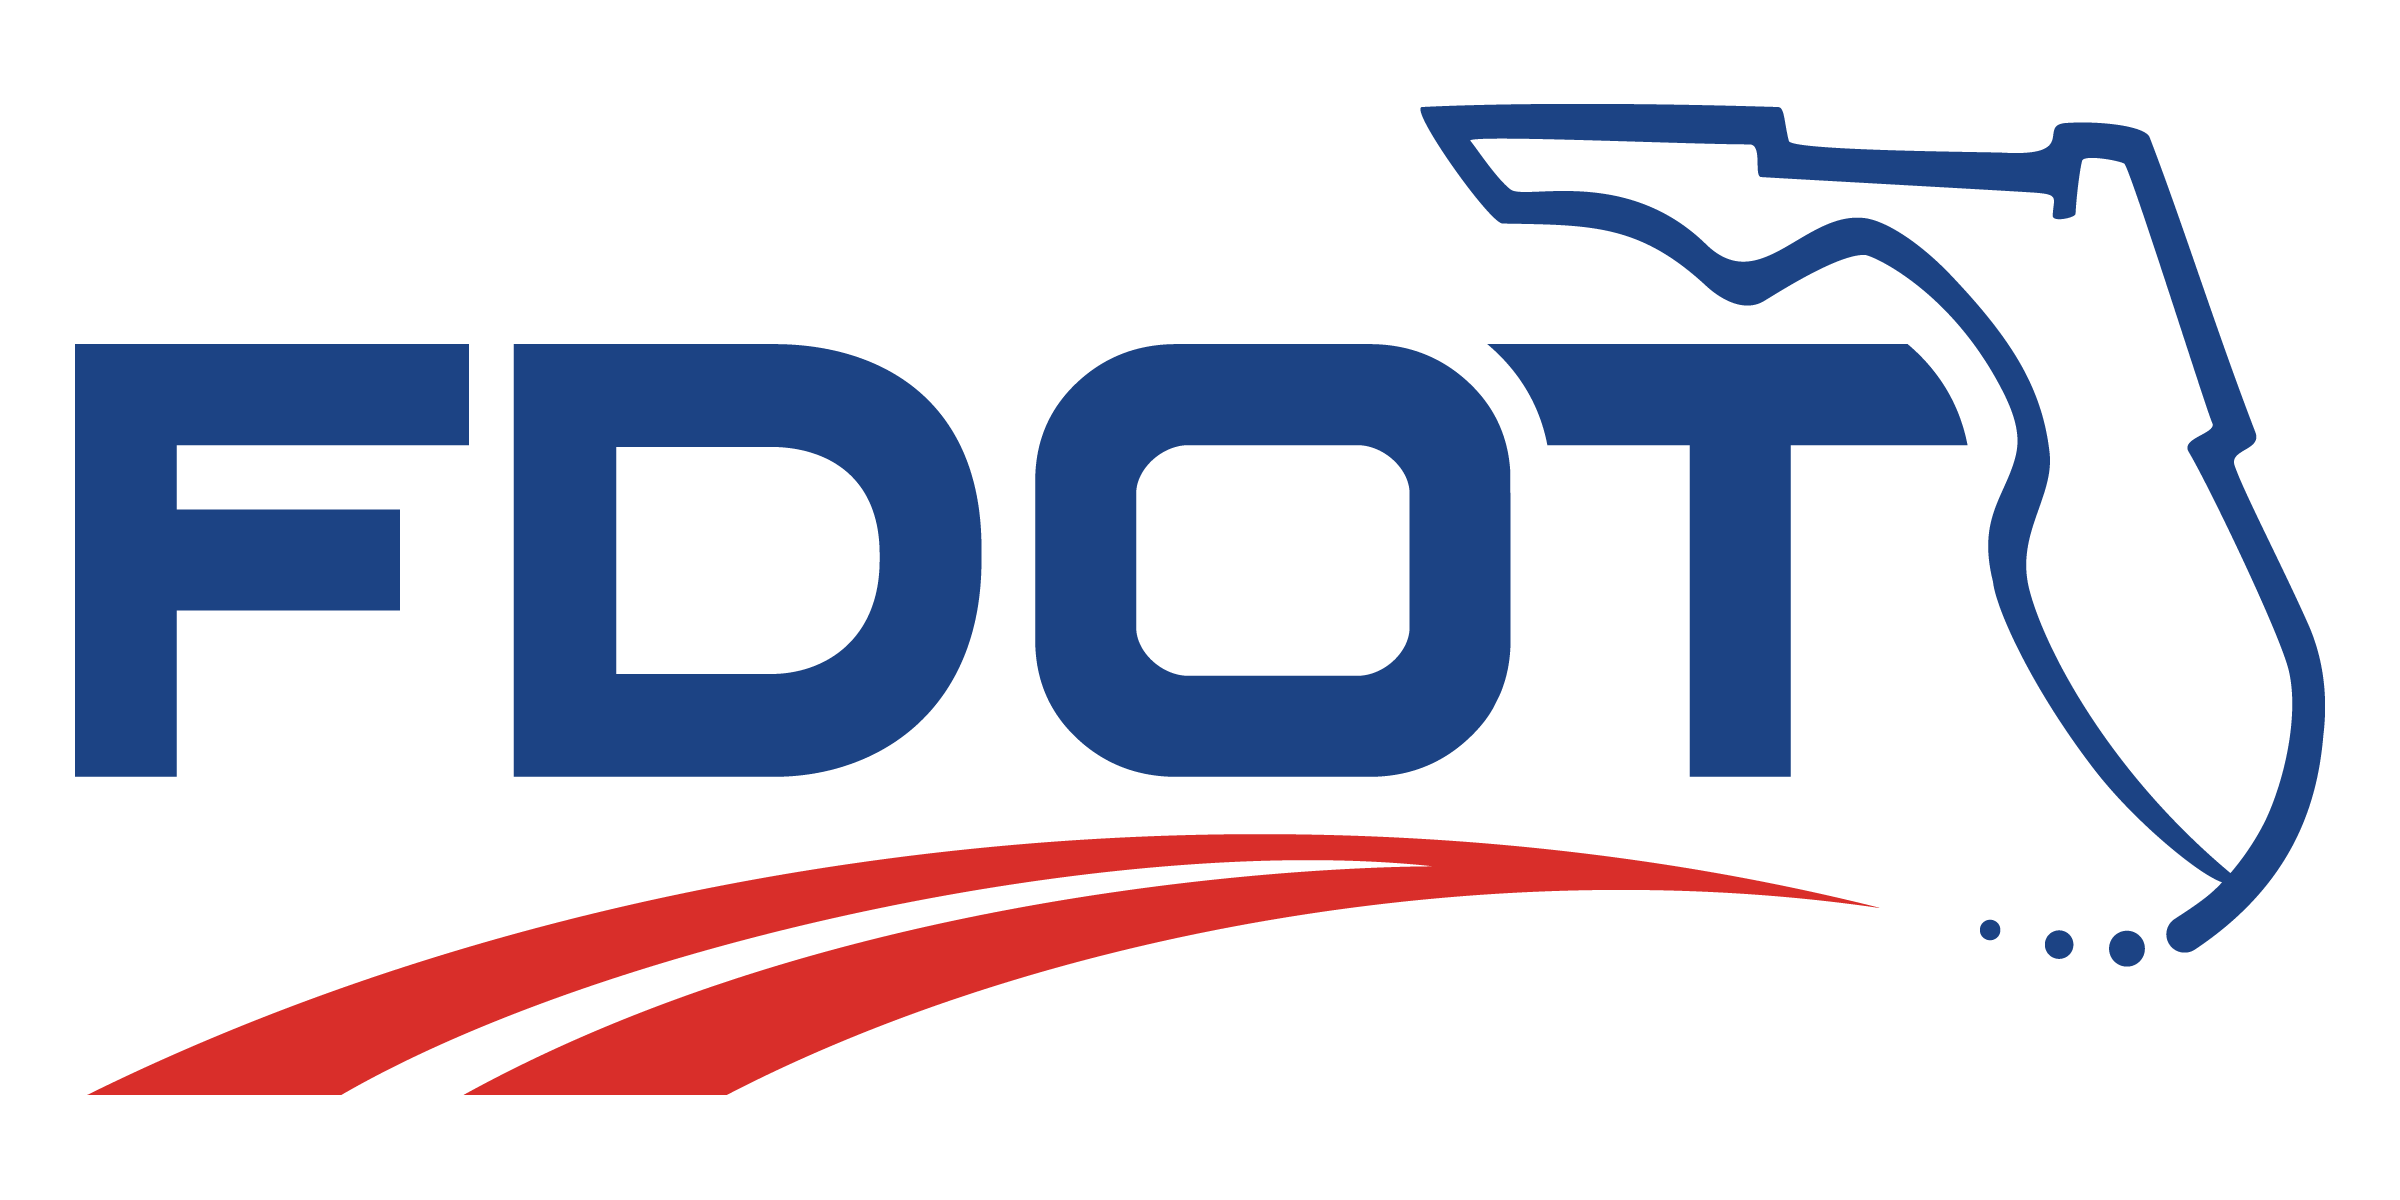 Florida Department of Transportation (FDOT) 